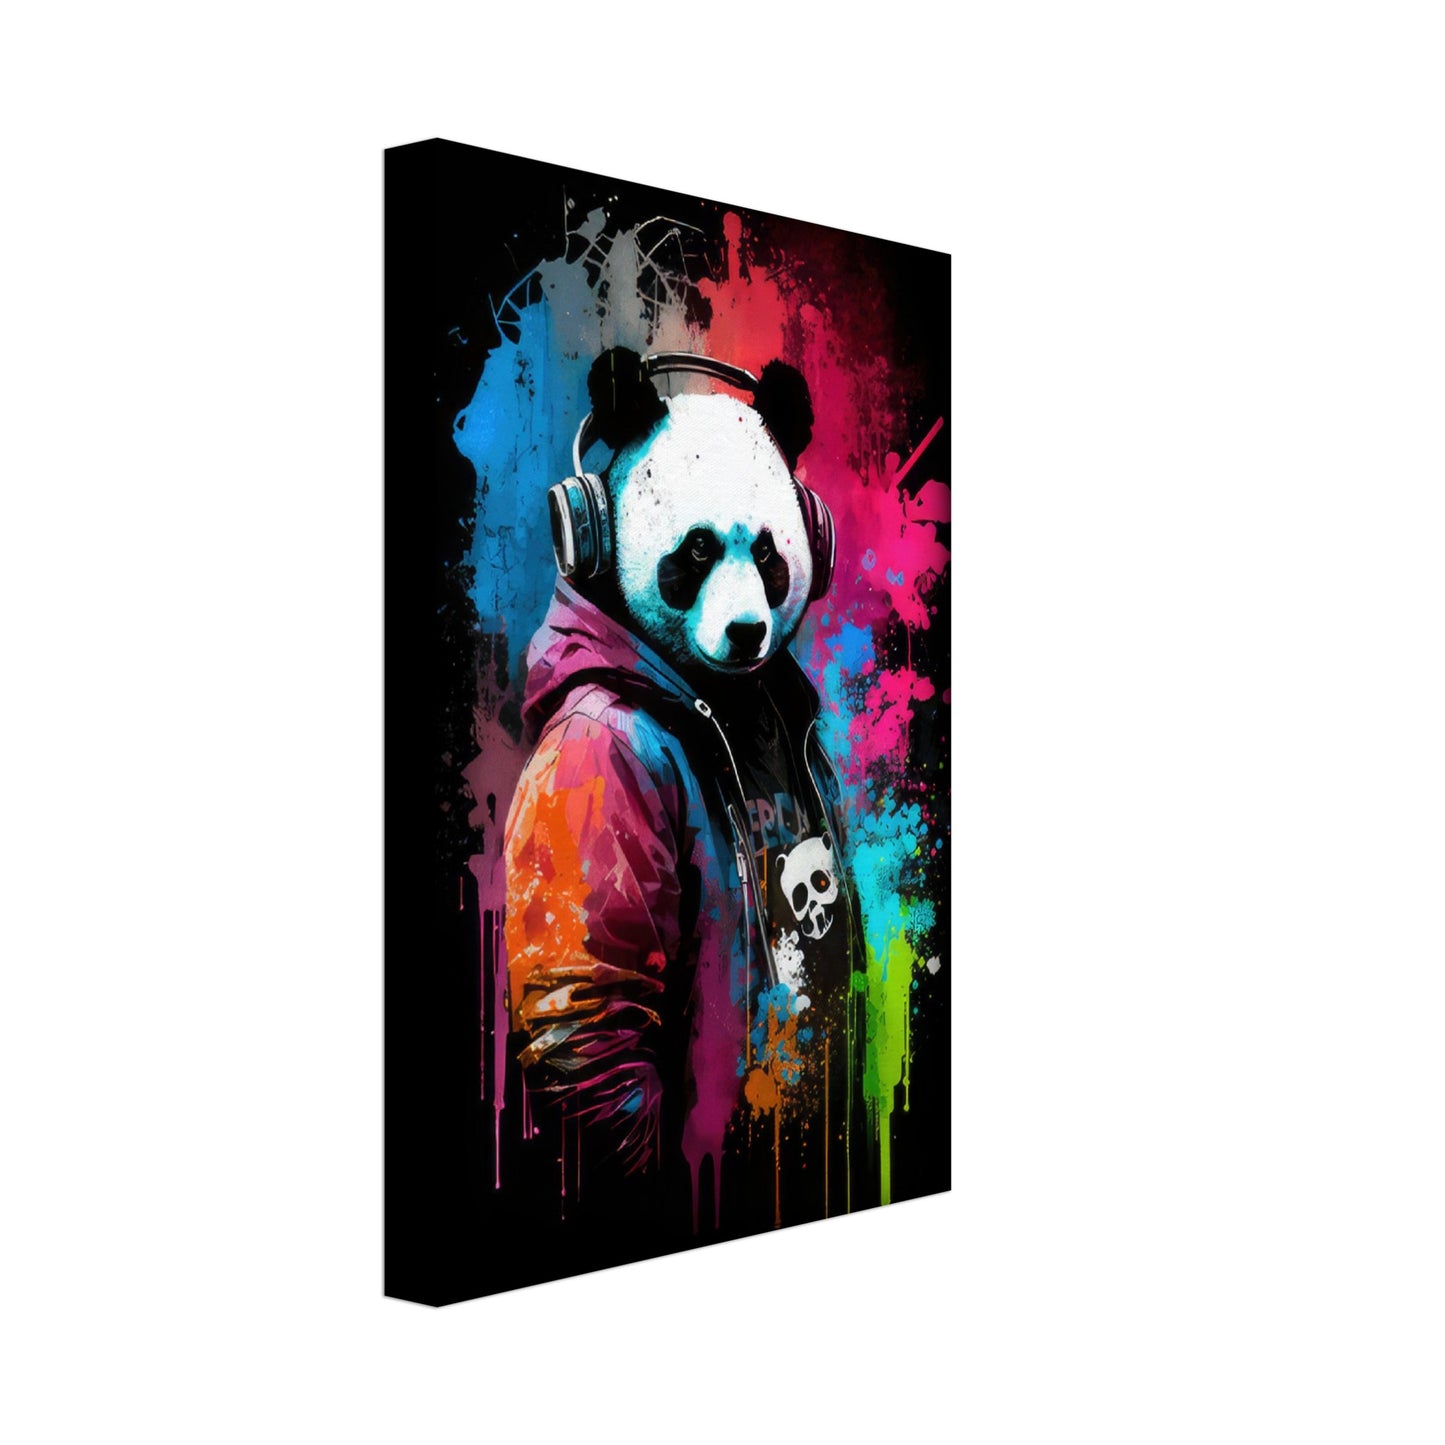 Black & White Panda Bliss  - Panda Wandbild - Crazy Wildlife Leinwand ColorWorld im Hochformat - Coole Tiere & Animals Kunstdruck